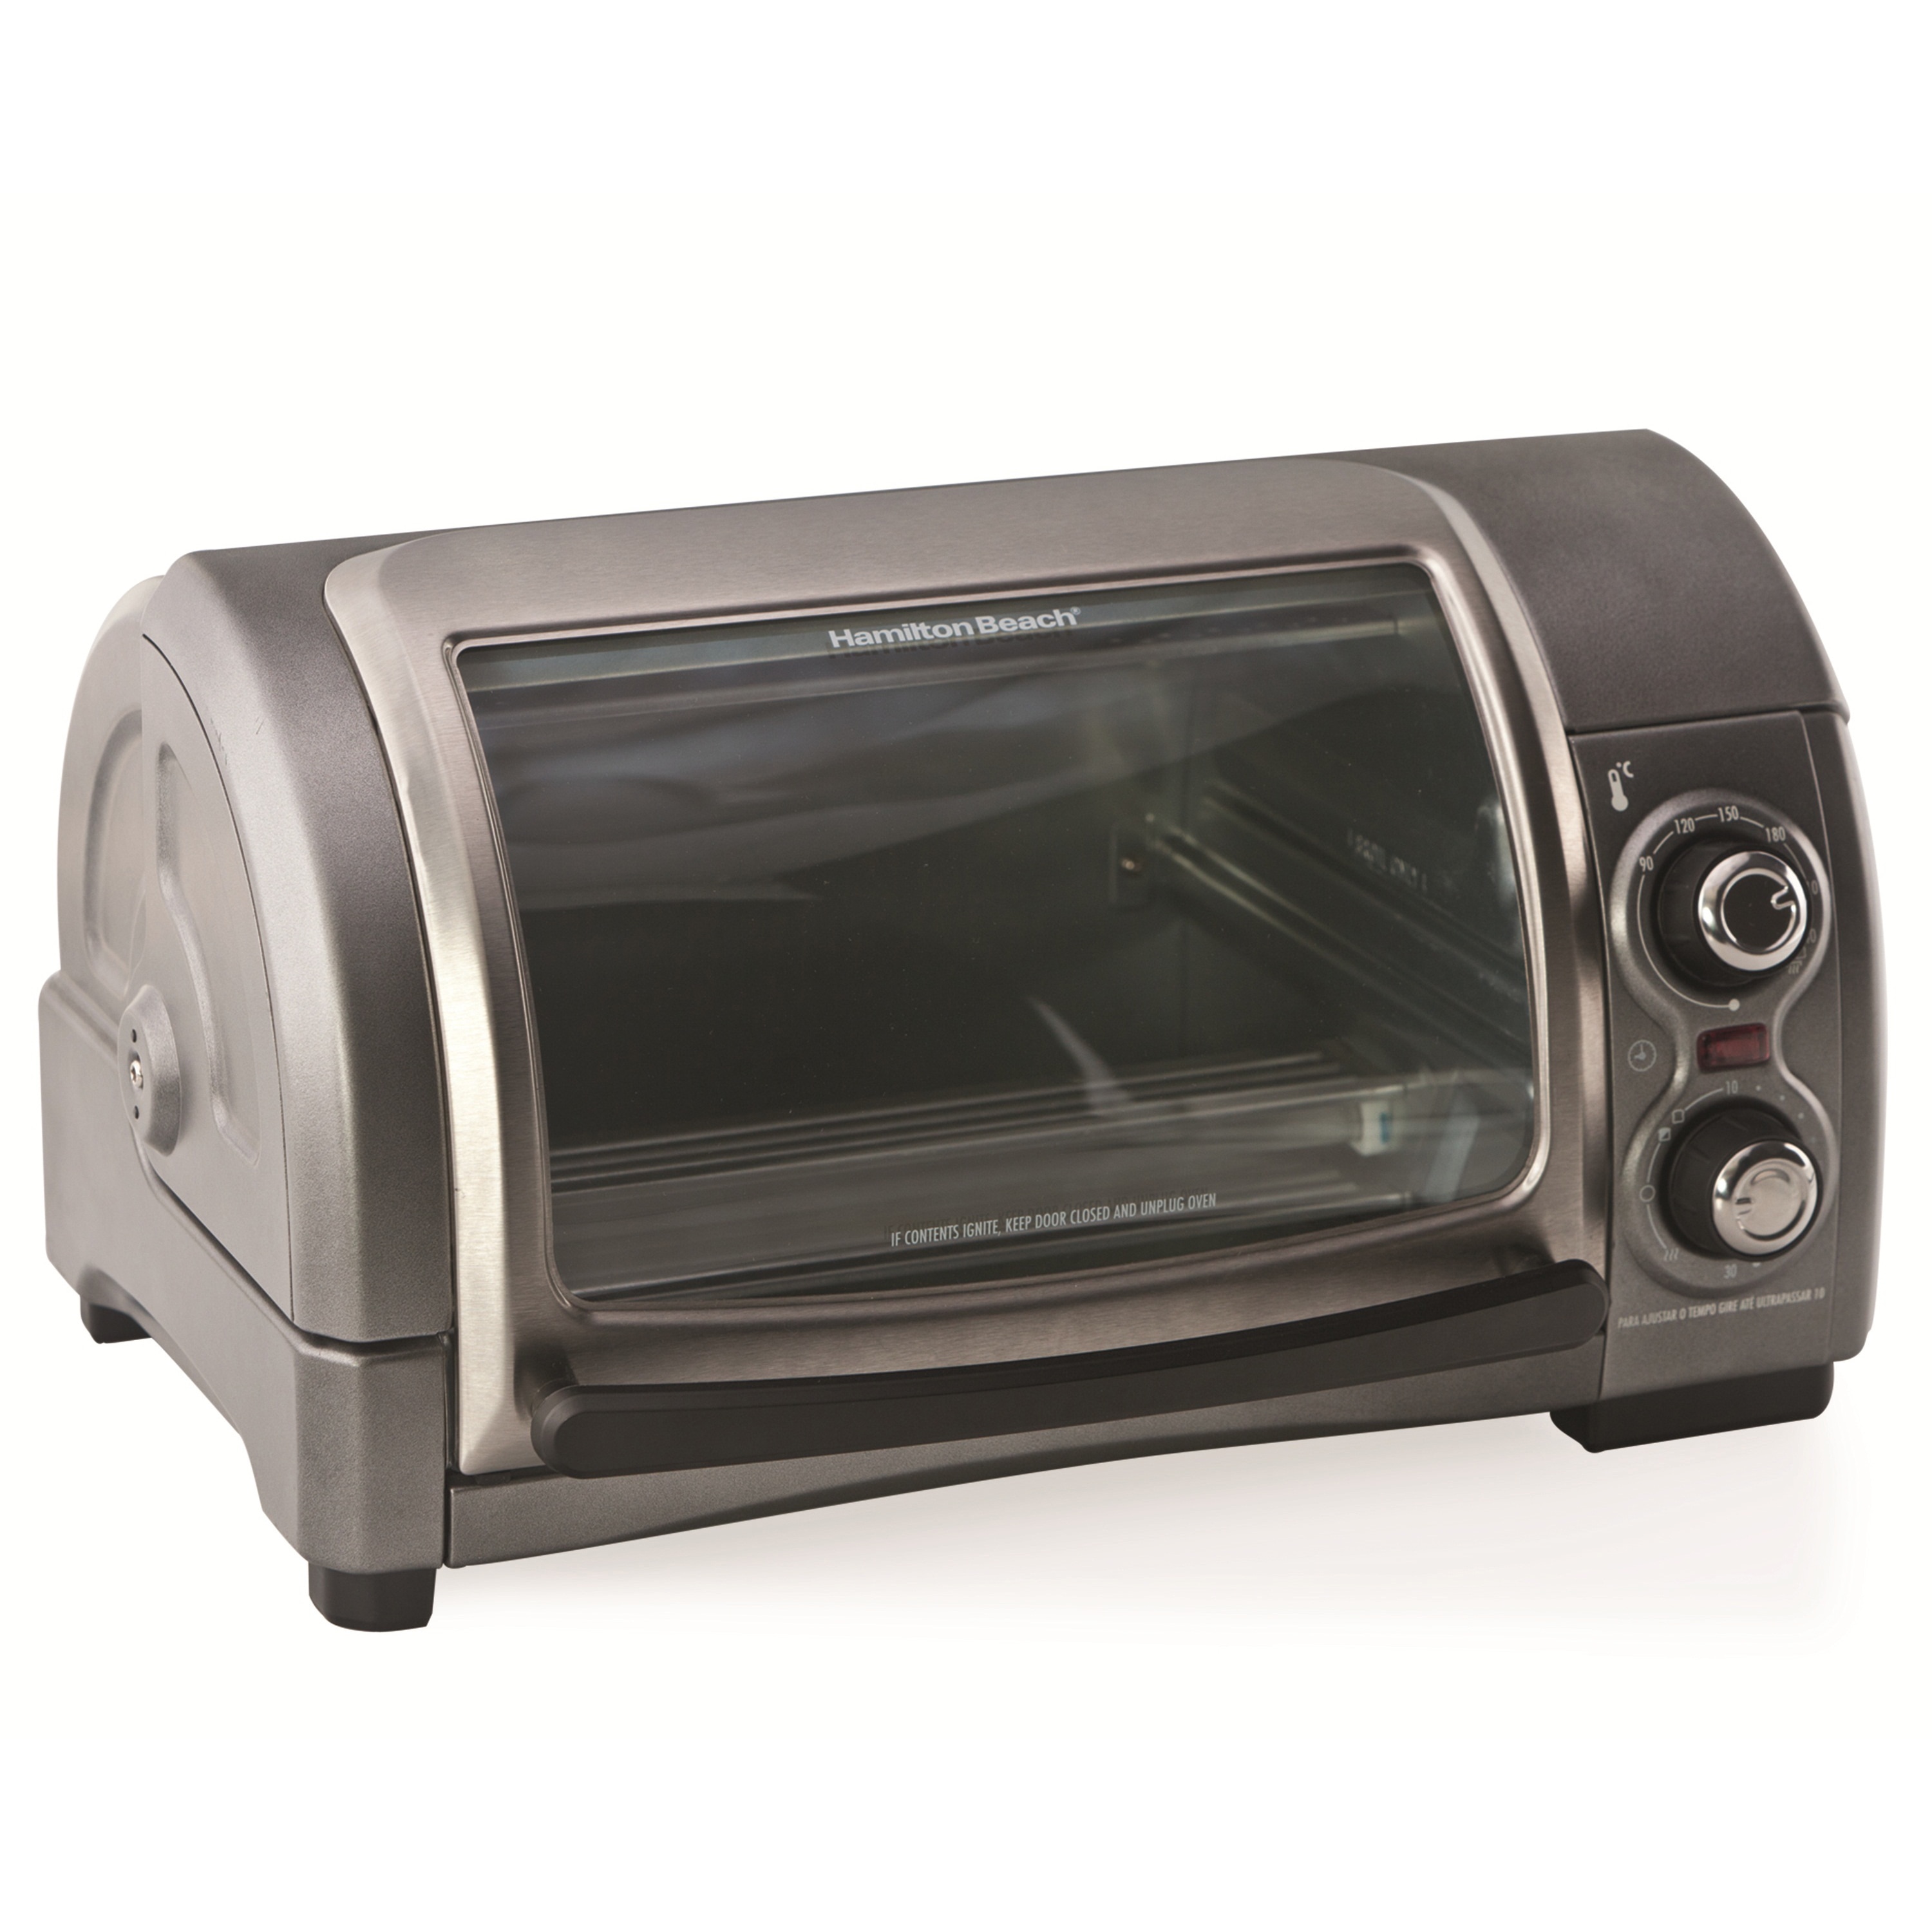 https://ak1.ostkcdn.com/images/products/7915598/Hamilton-Beach-31134-Easy-Reach-4-slice-Toaster-Oven-ab2fcbf0-df02-4086-a12d-205fde140320.jpg